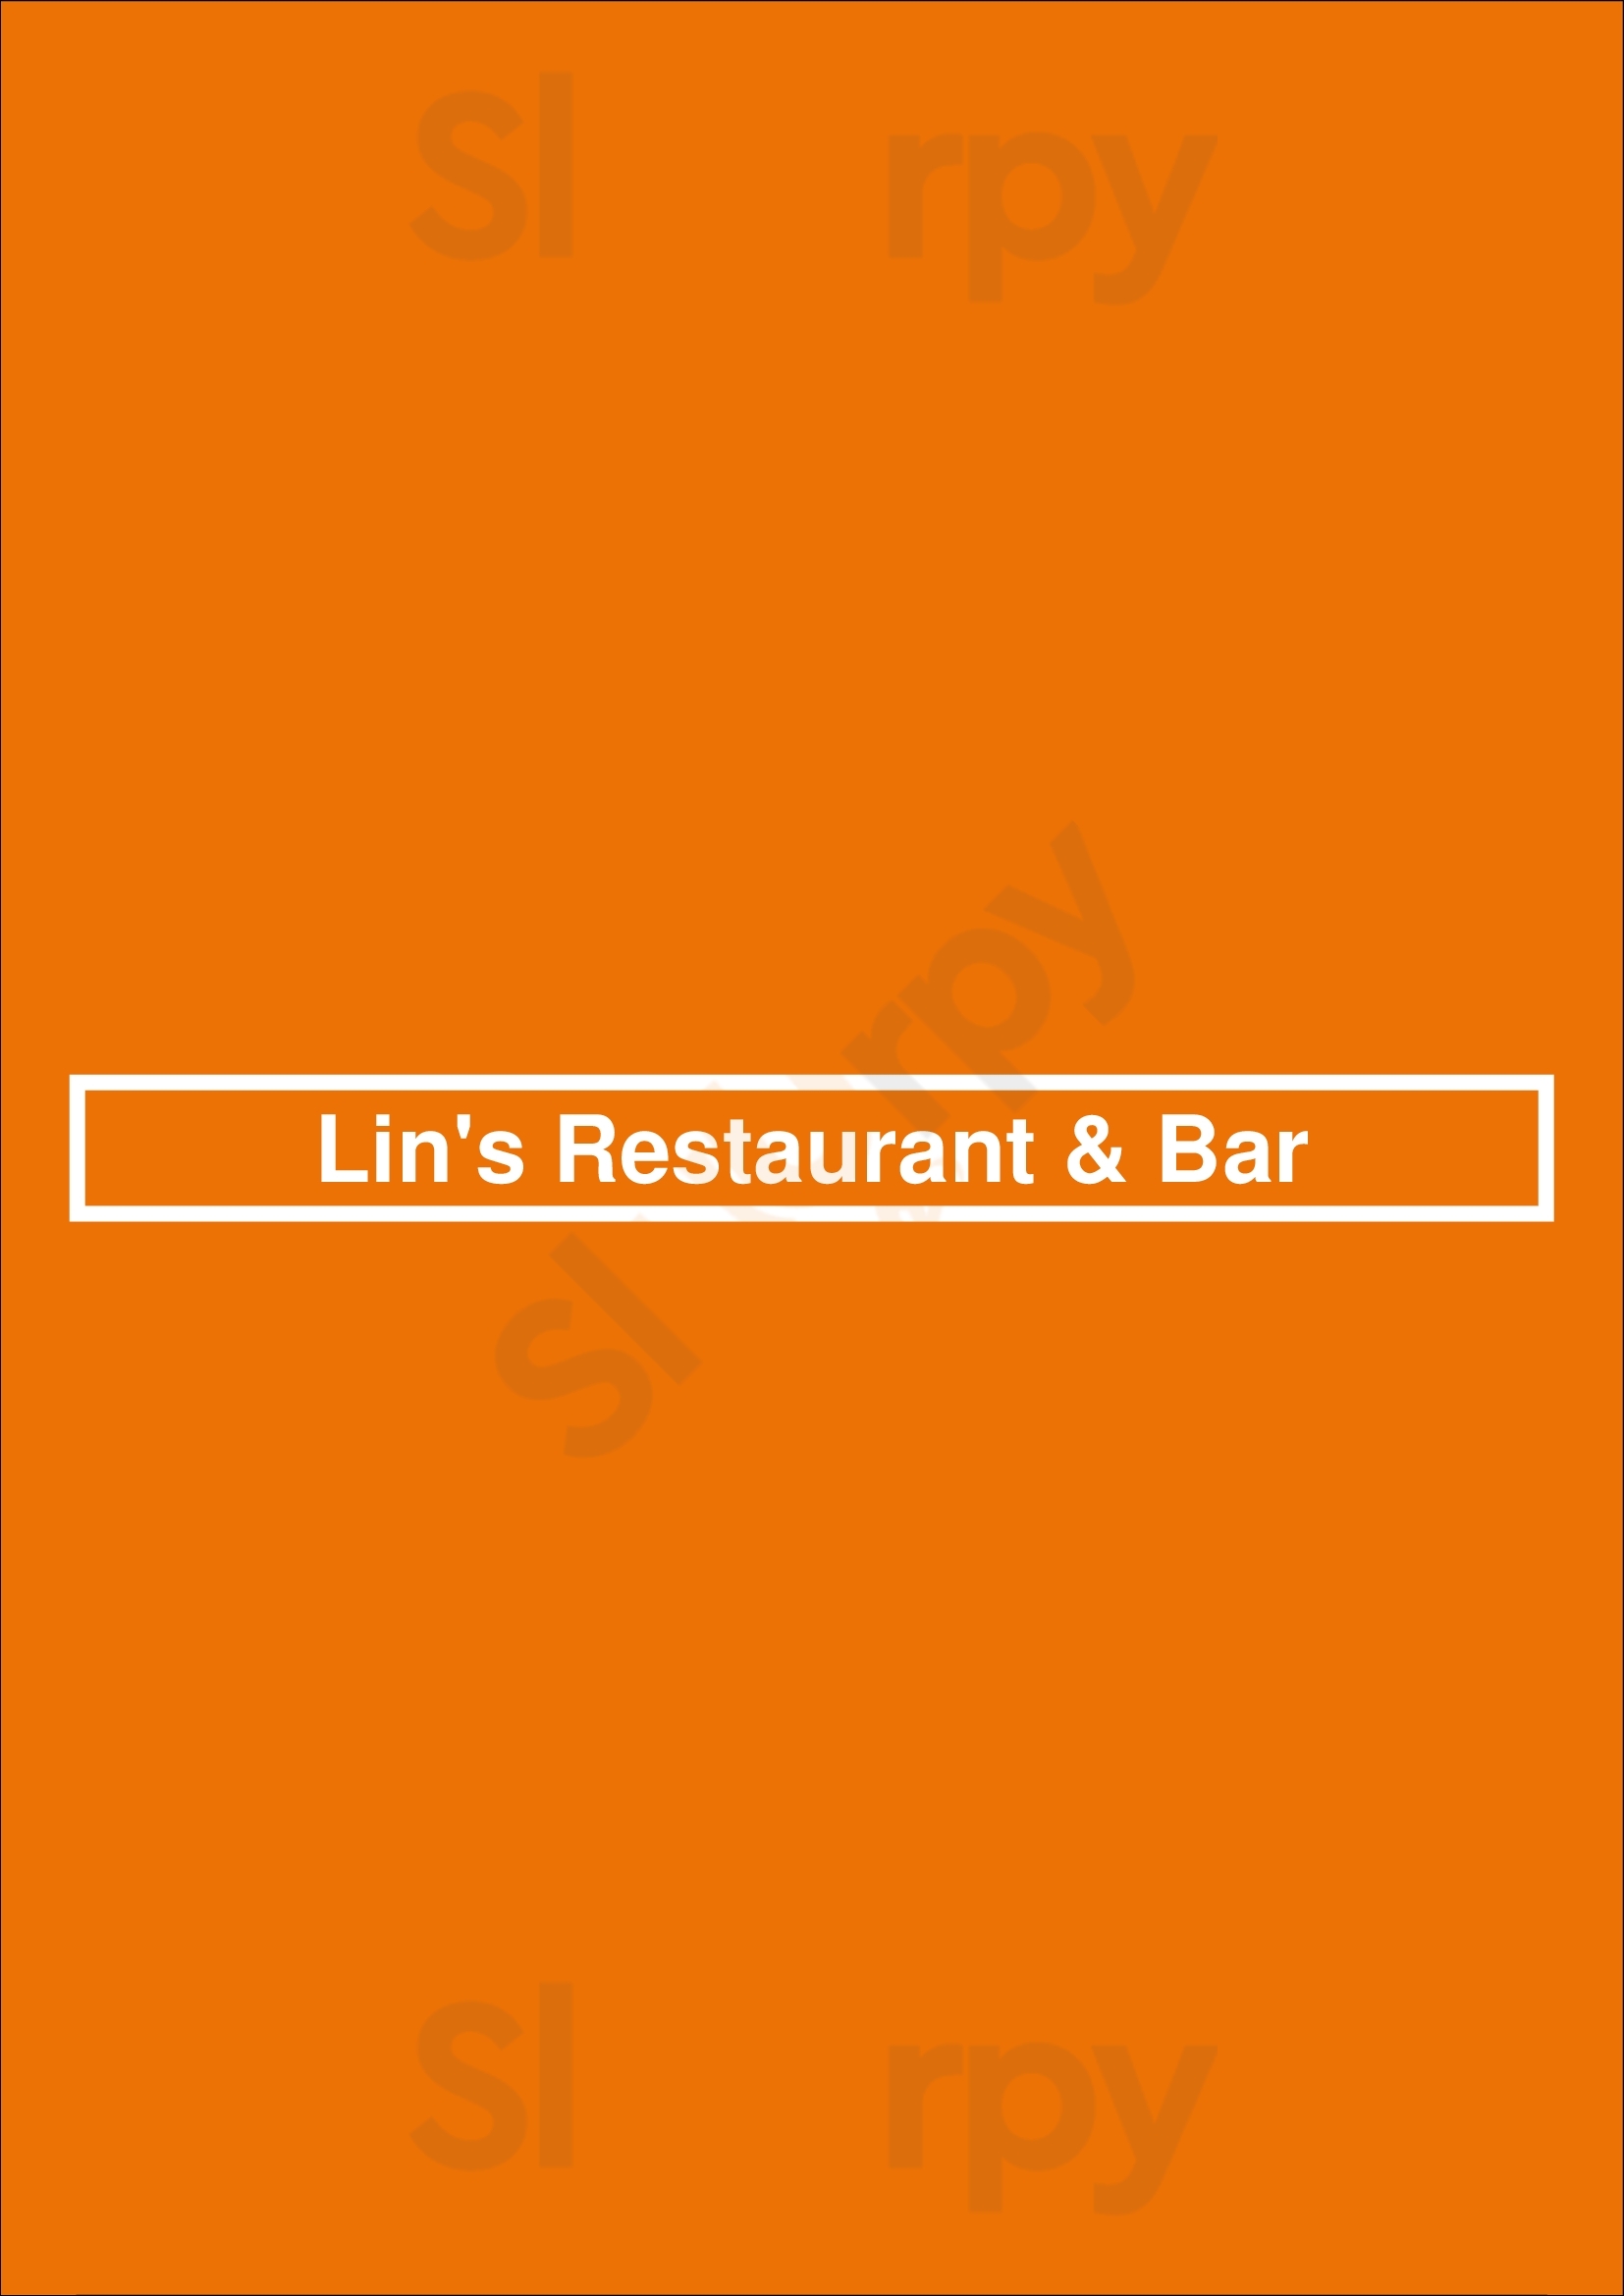 Lin's Restaurant & Bar London Menu - 1